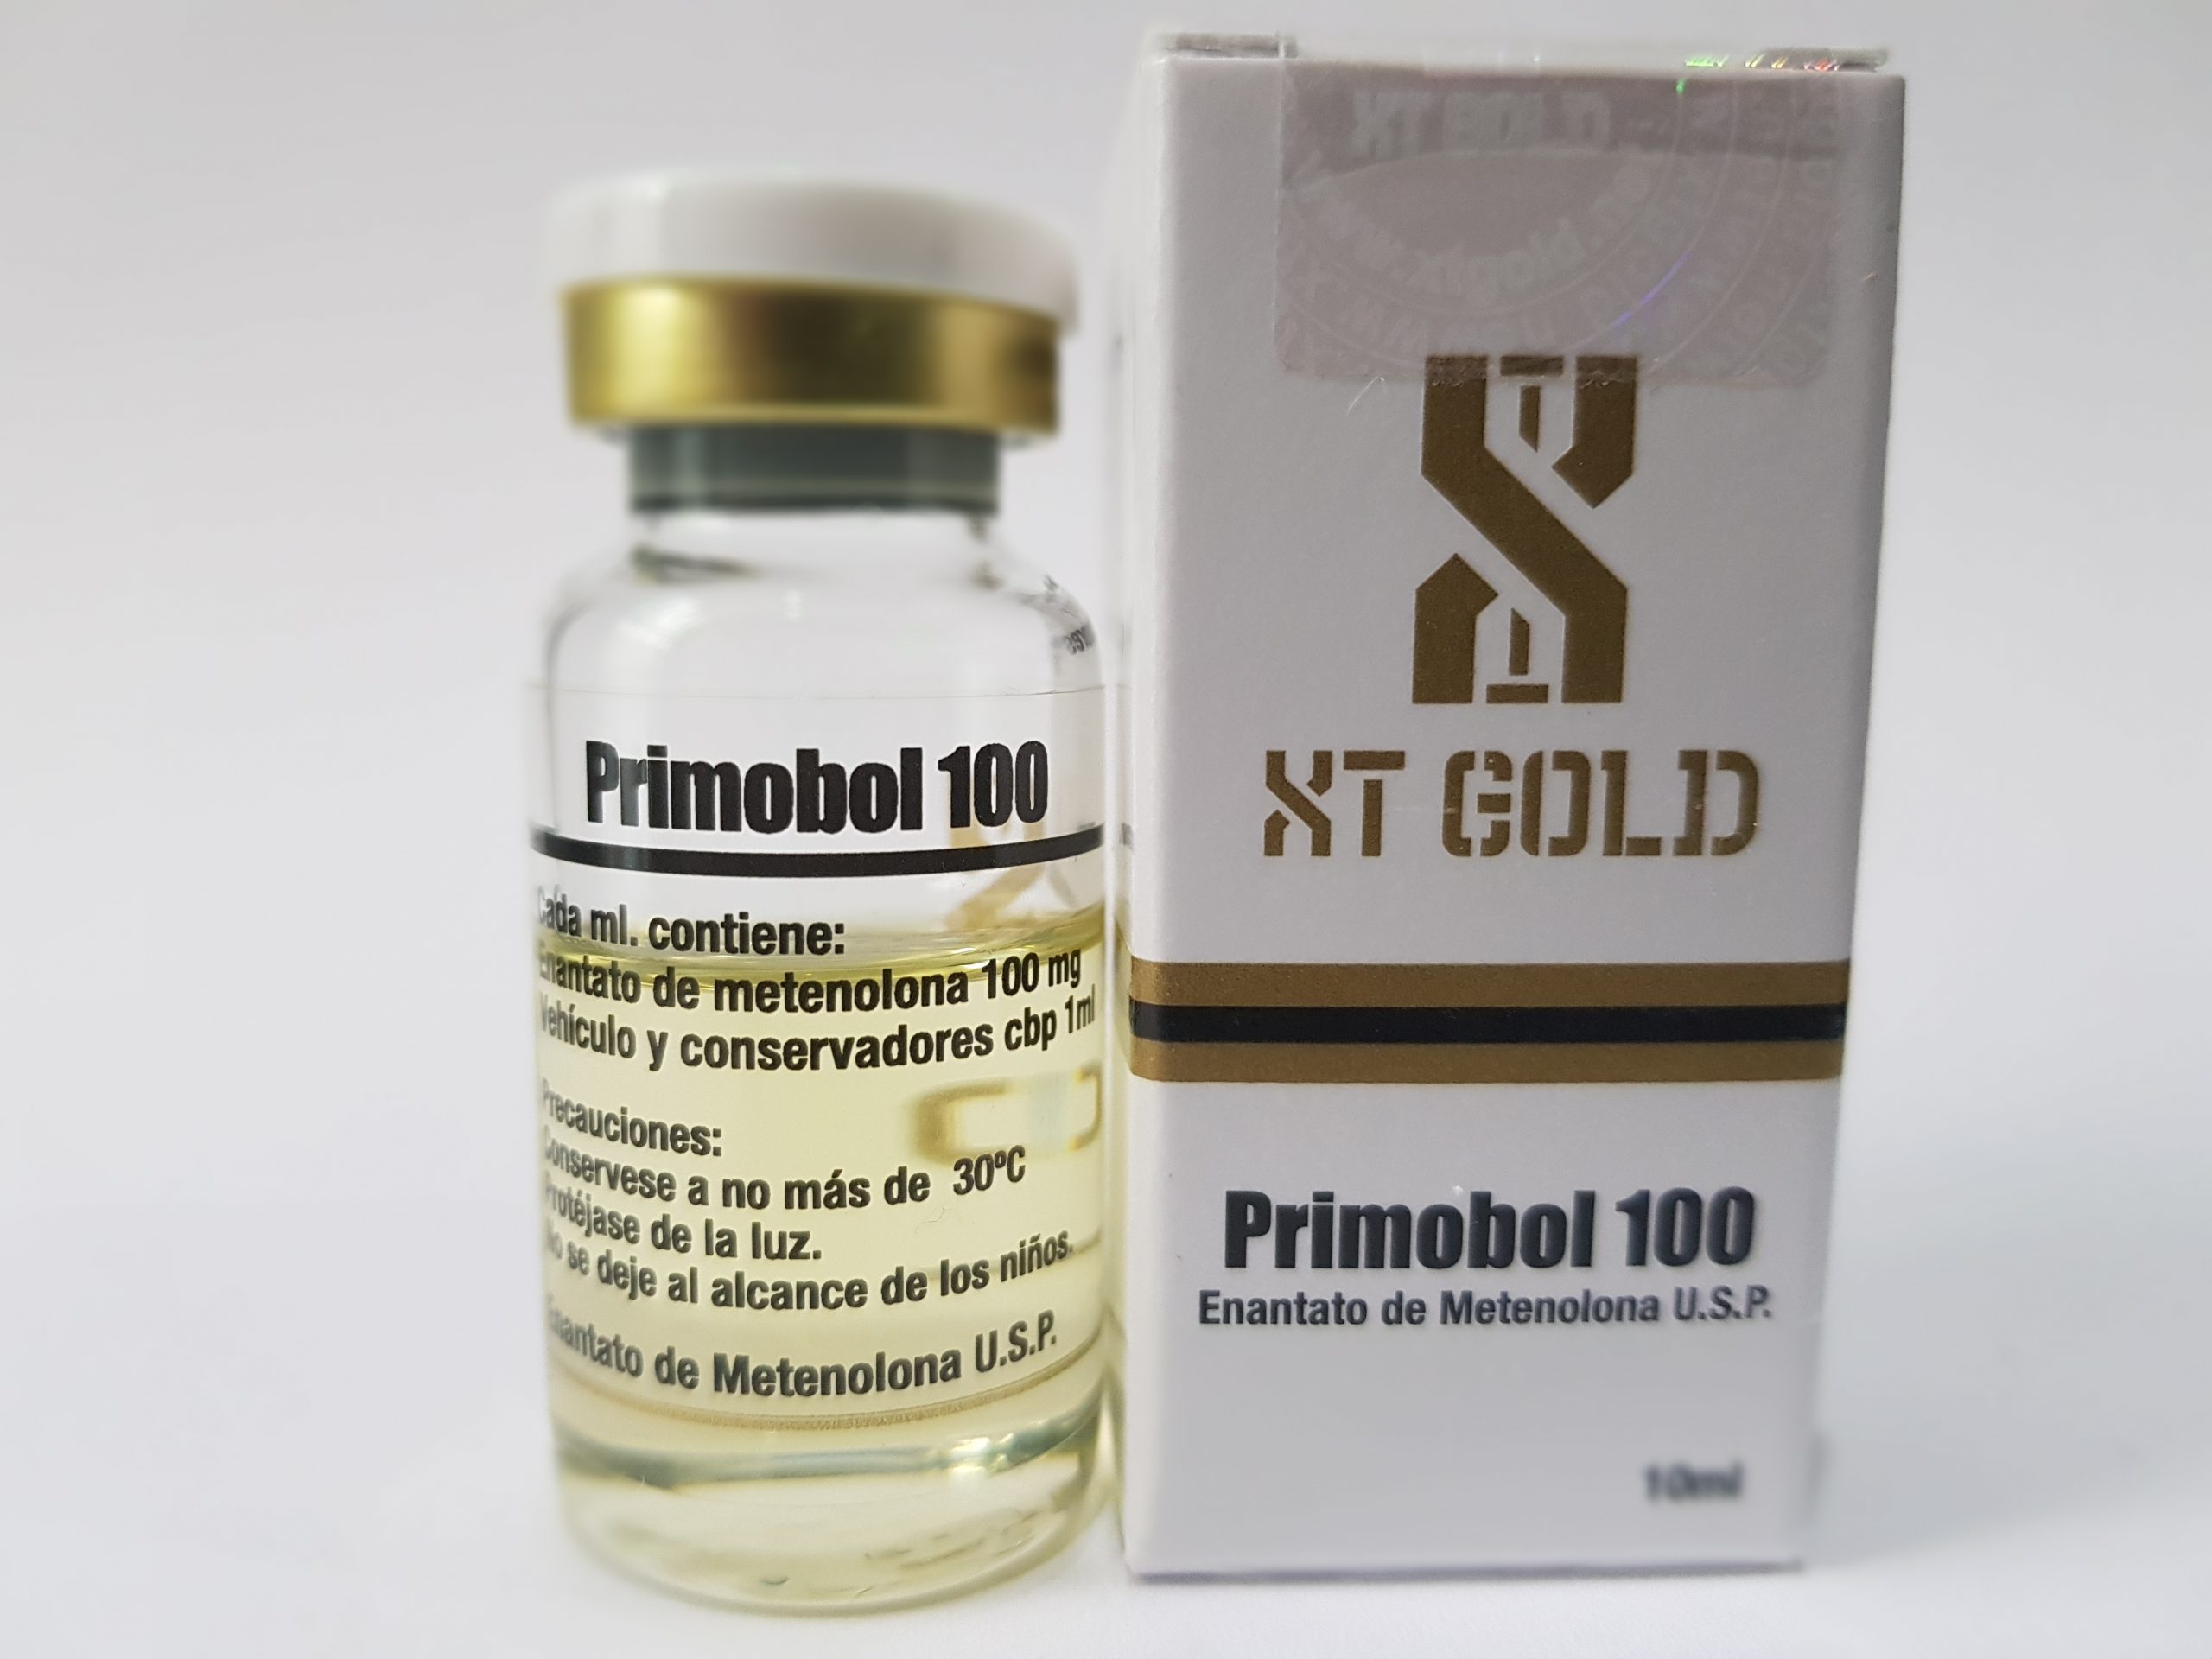 Primobol Xt Gold